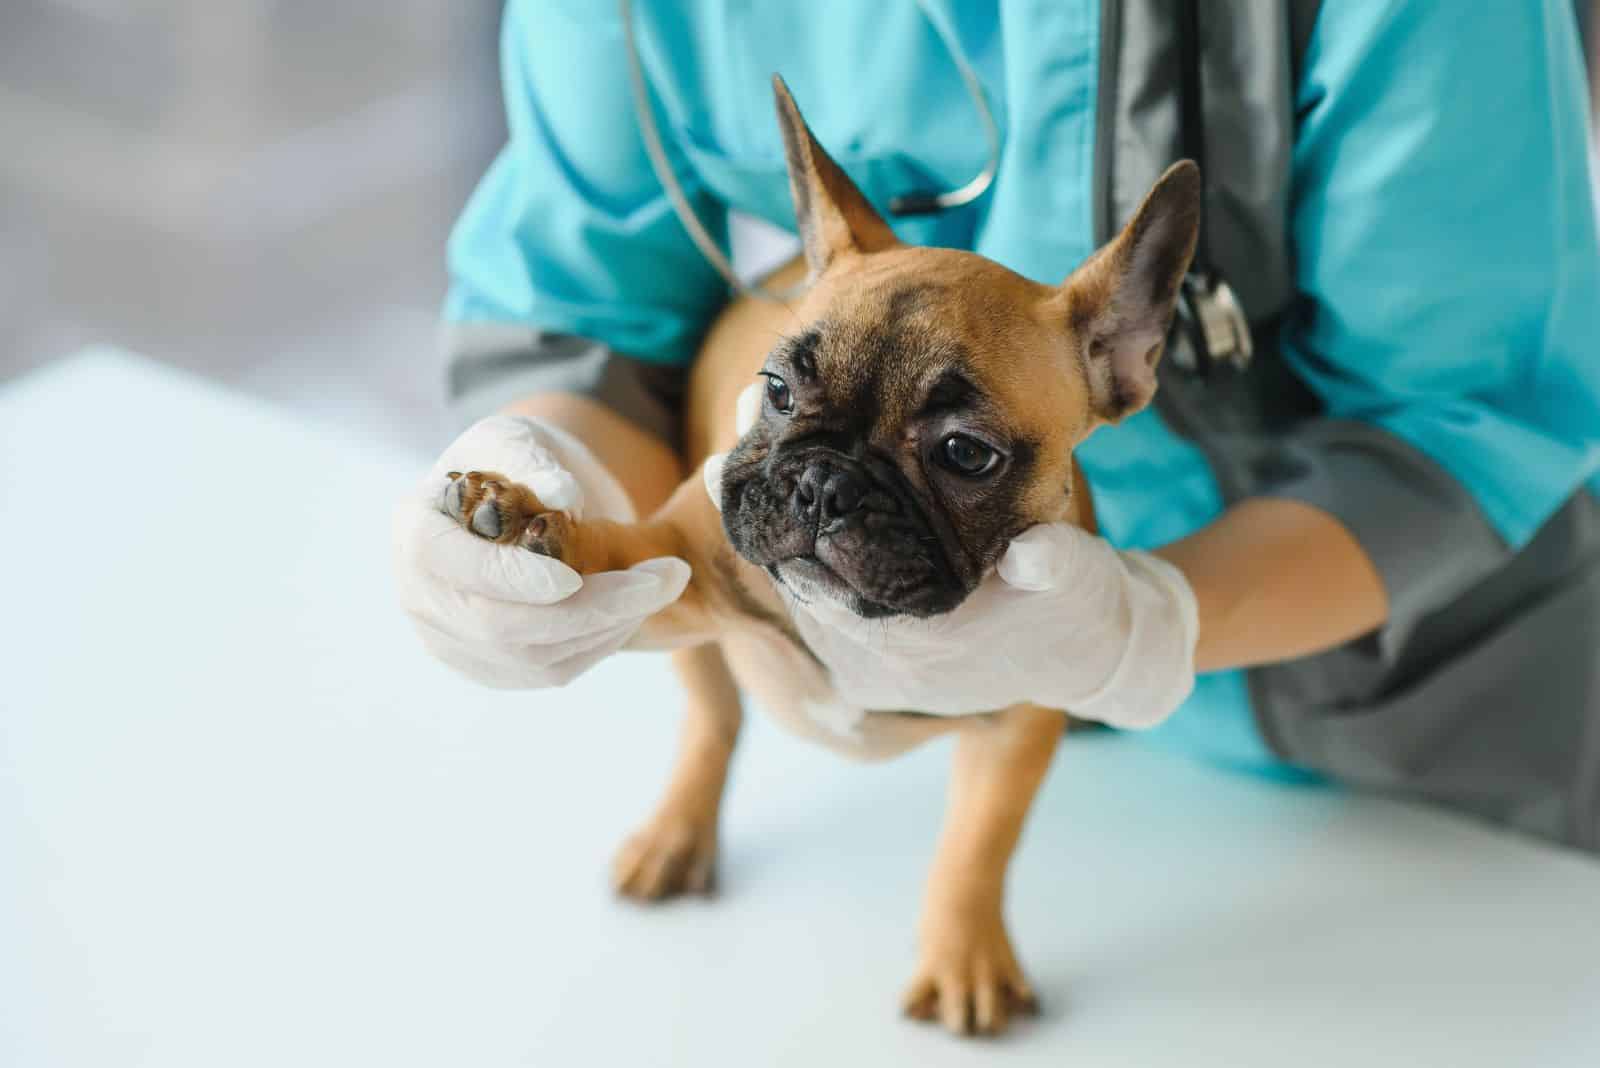 the vet examines the dog's leg